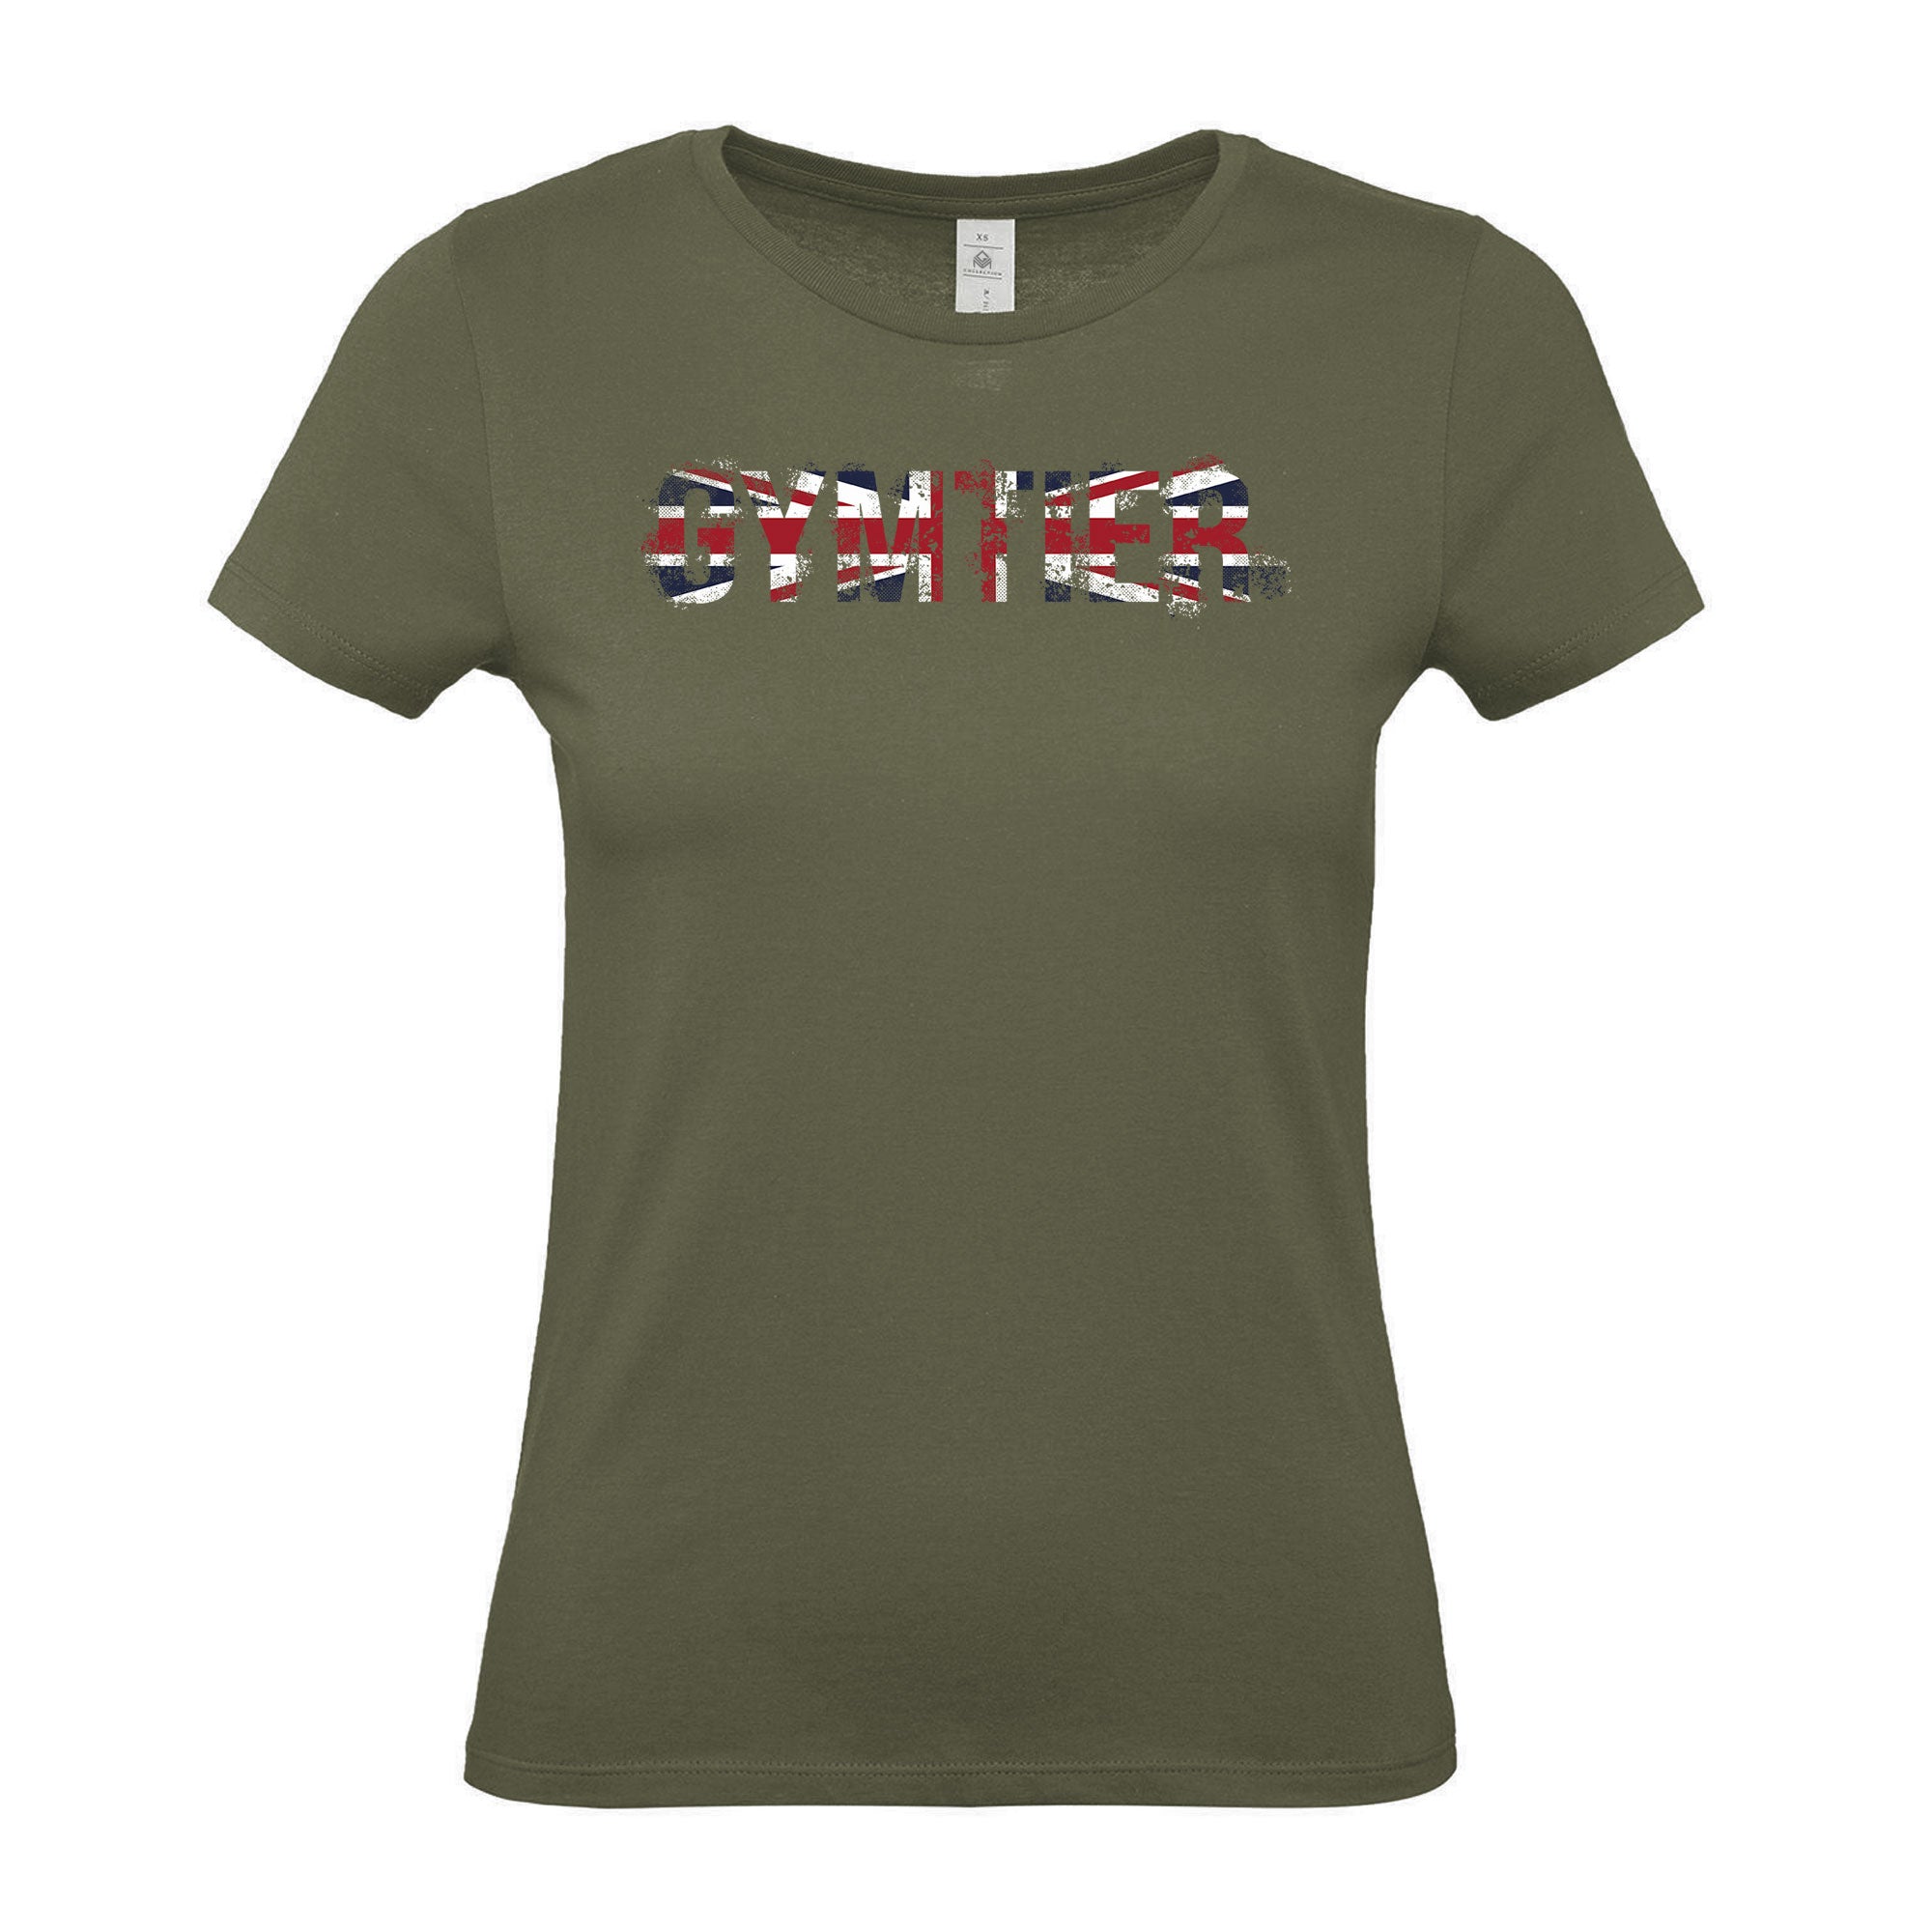 GYMTIER UK - Women's Gym T-Shirt